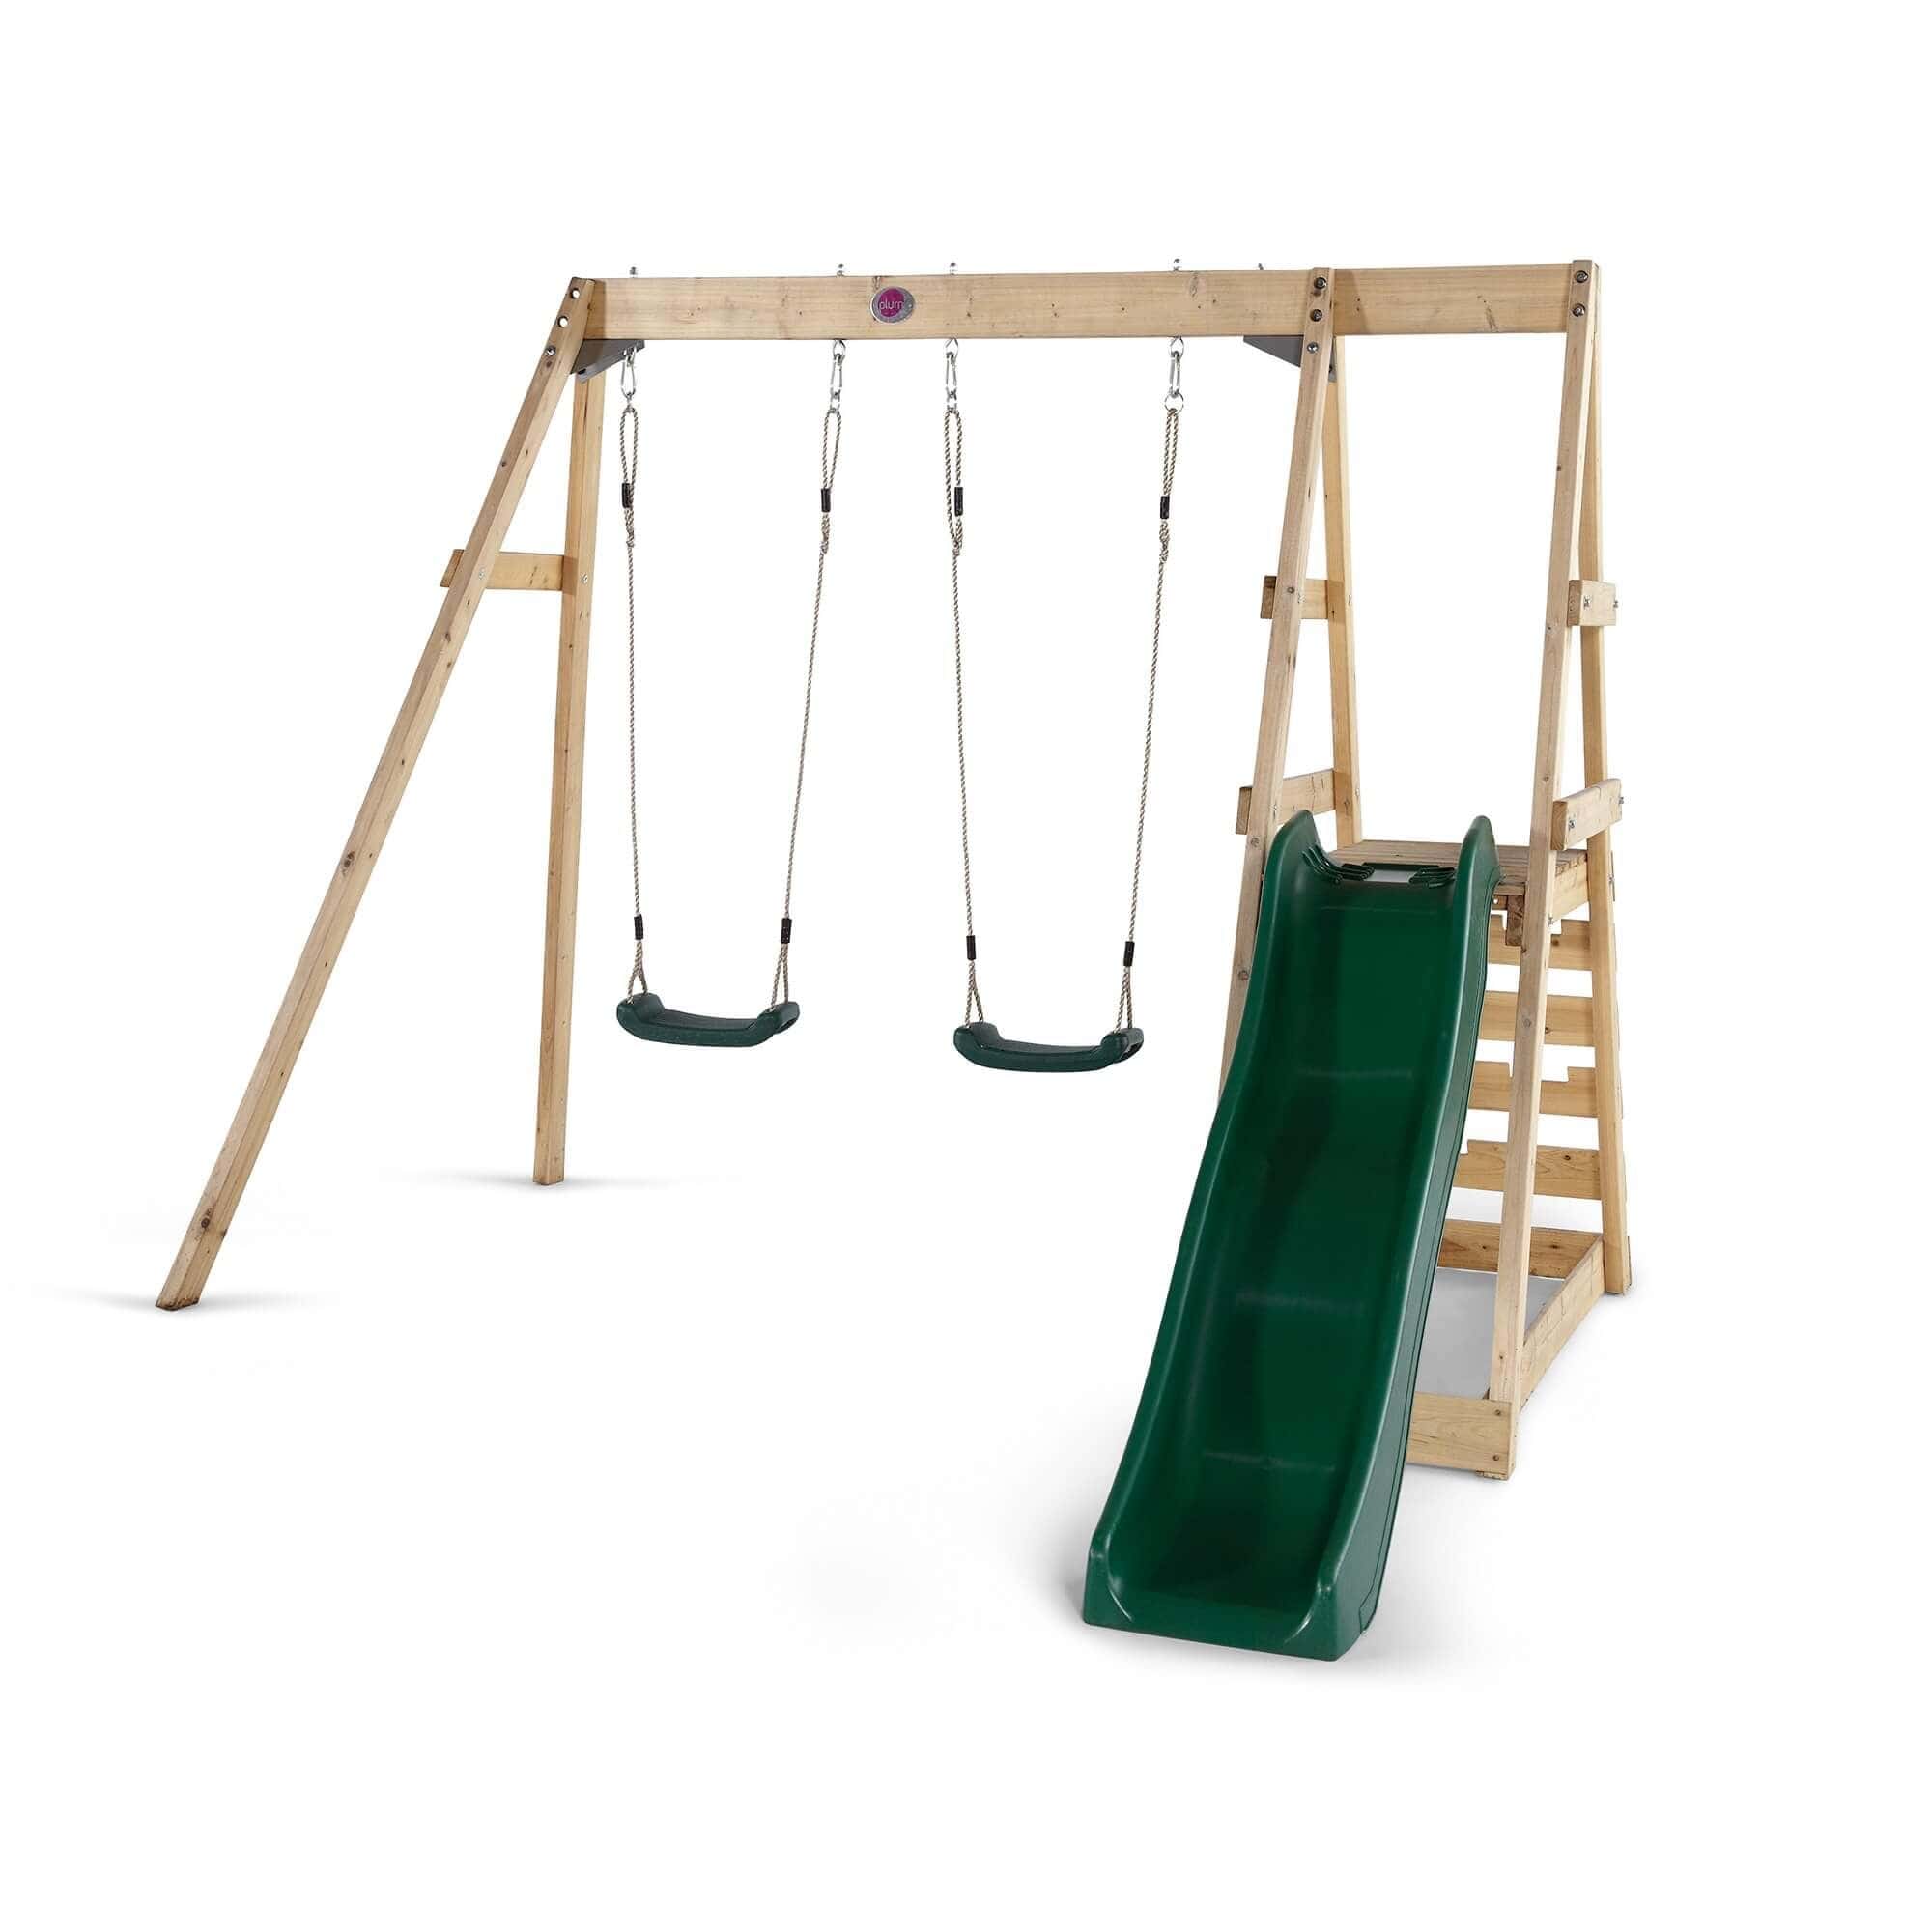 Plum ® Tamarin wooden swing set